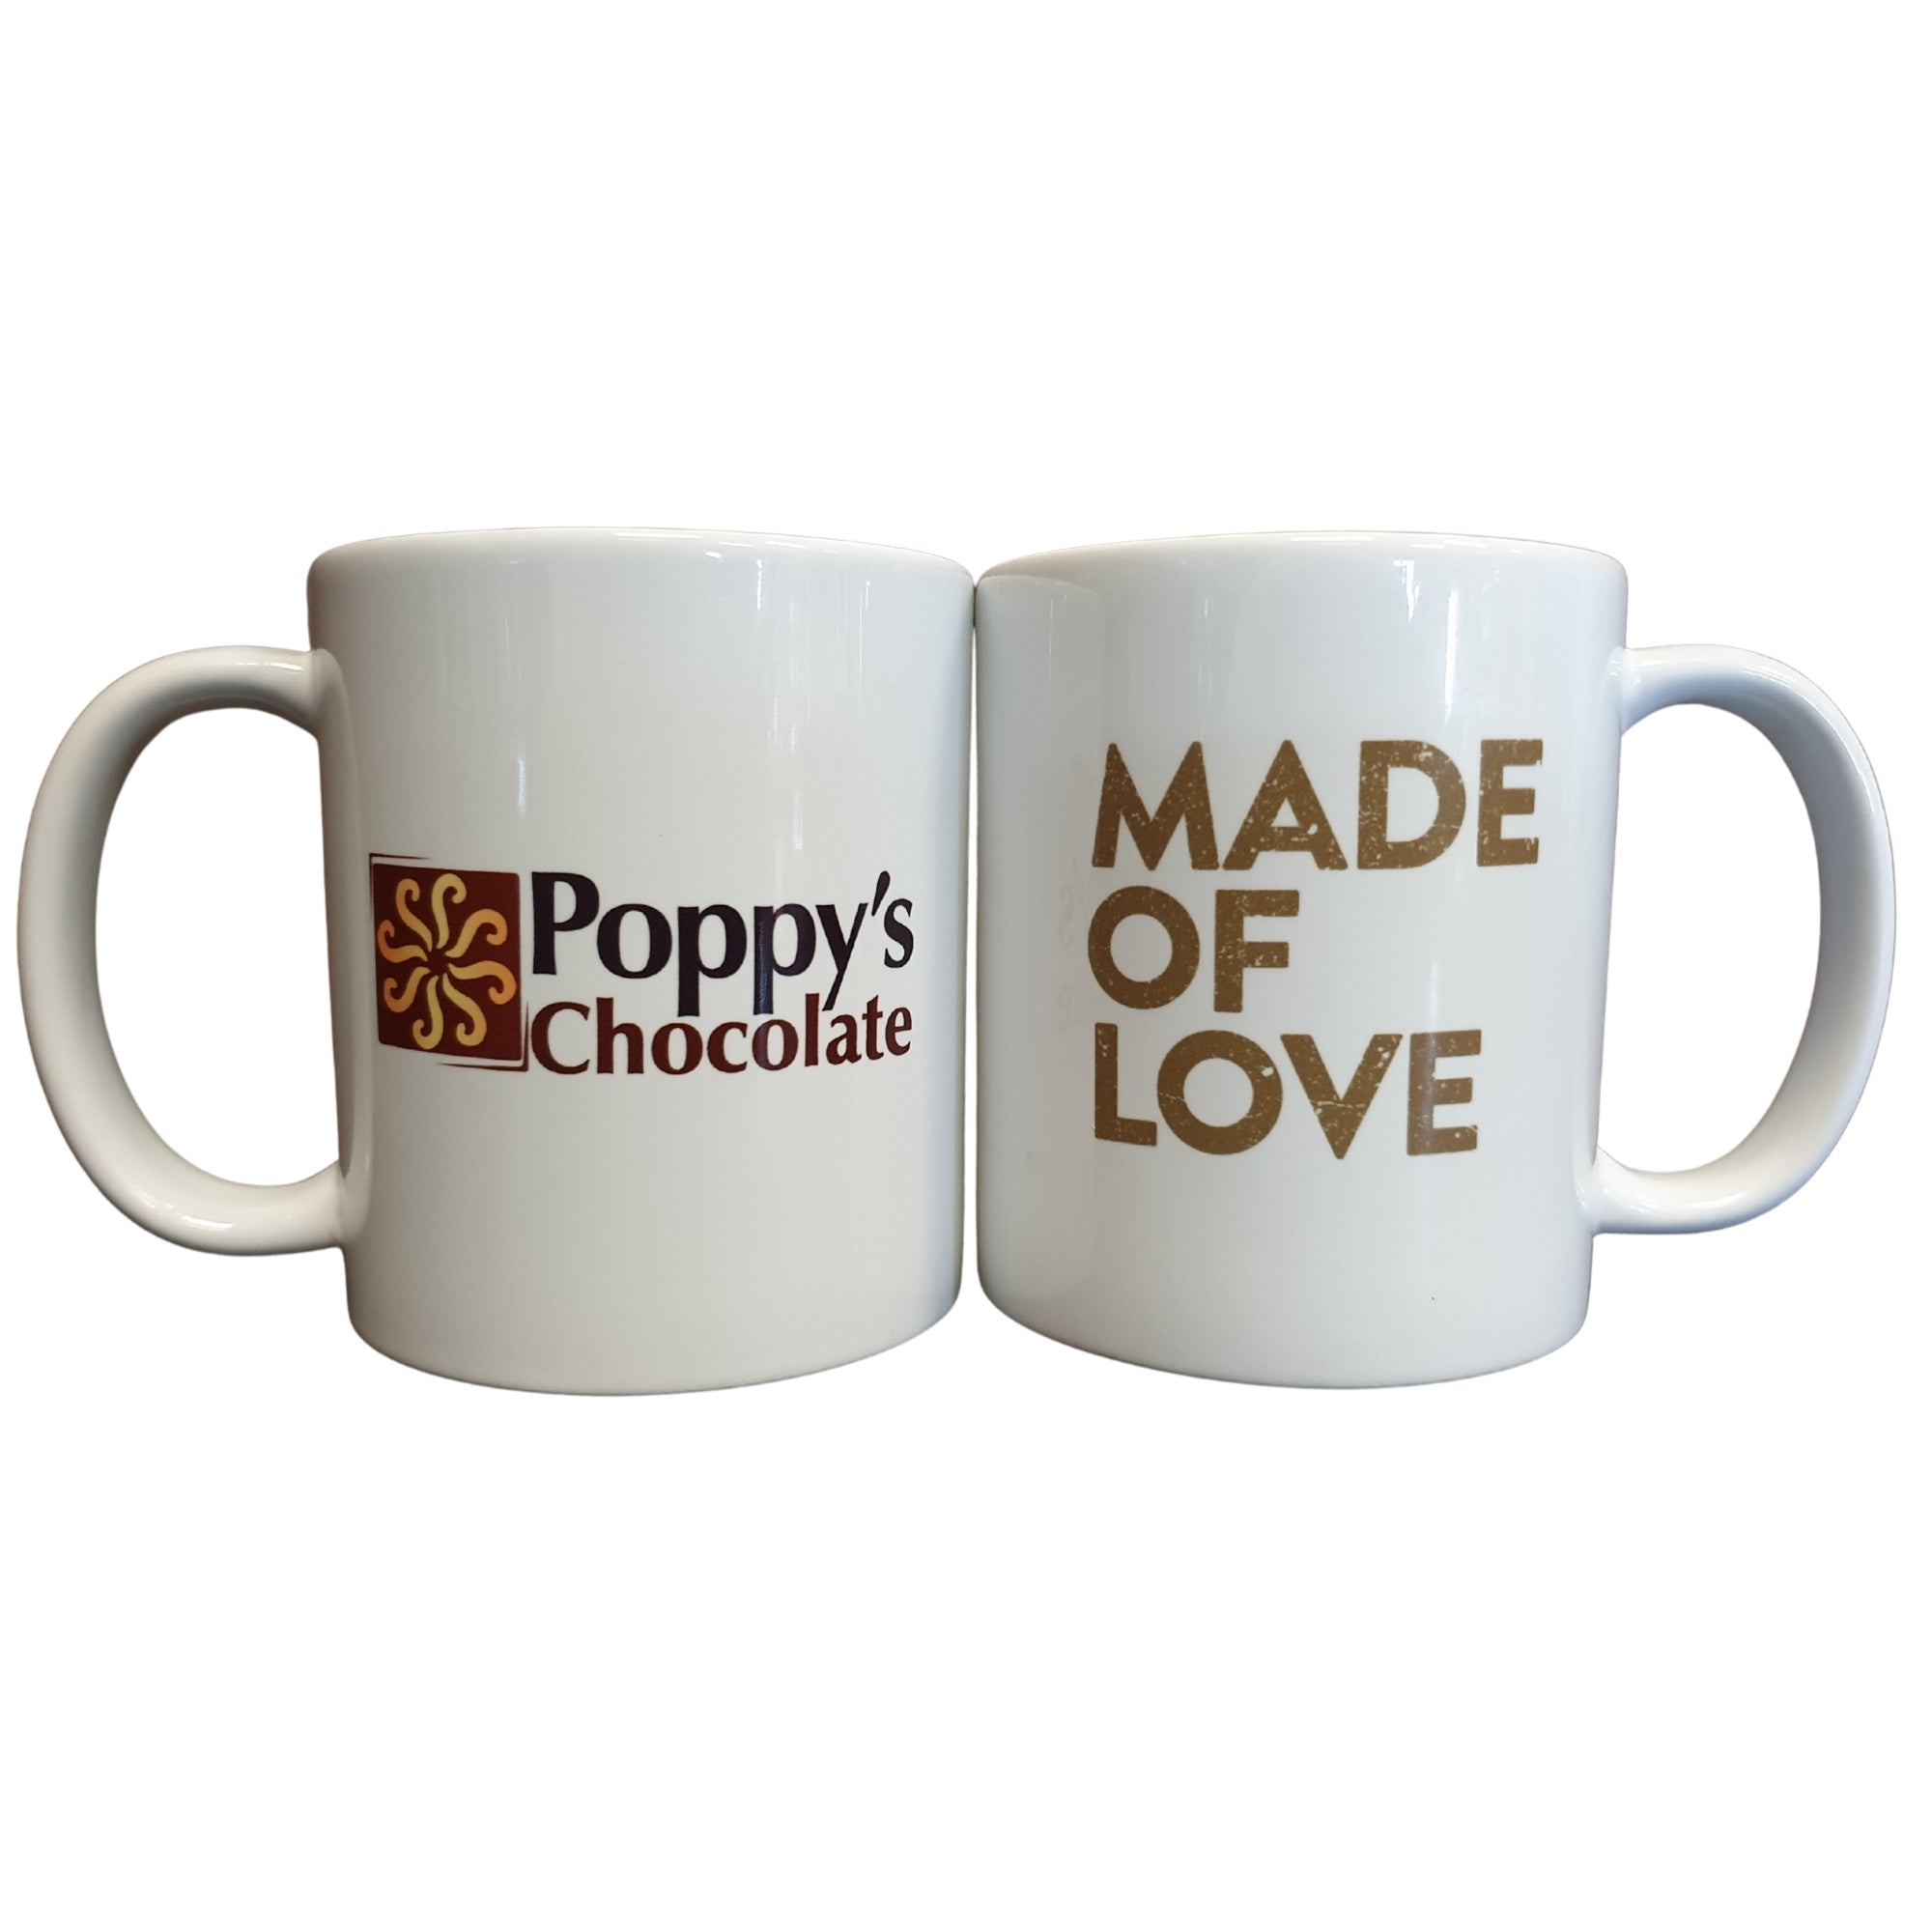 Poppy's Chocolate Mug